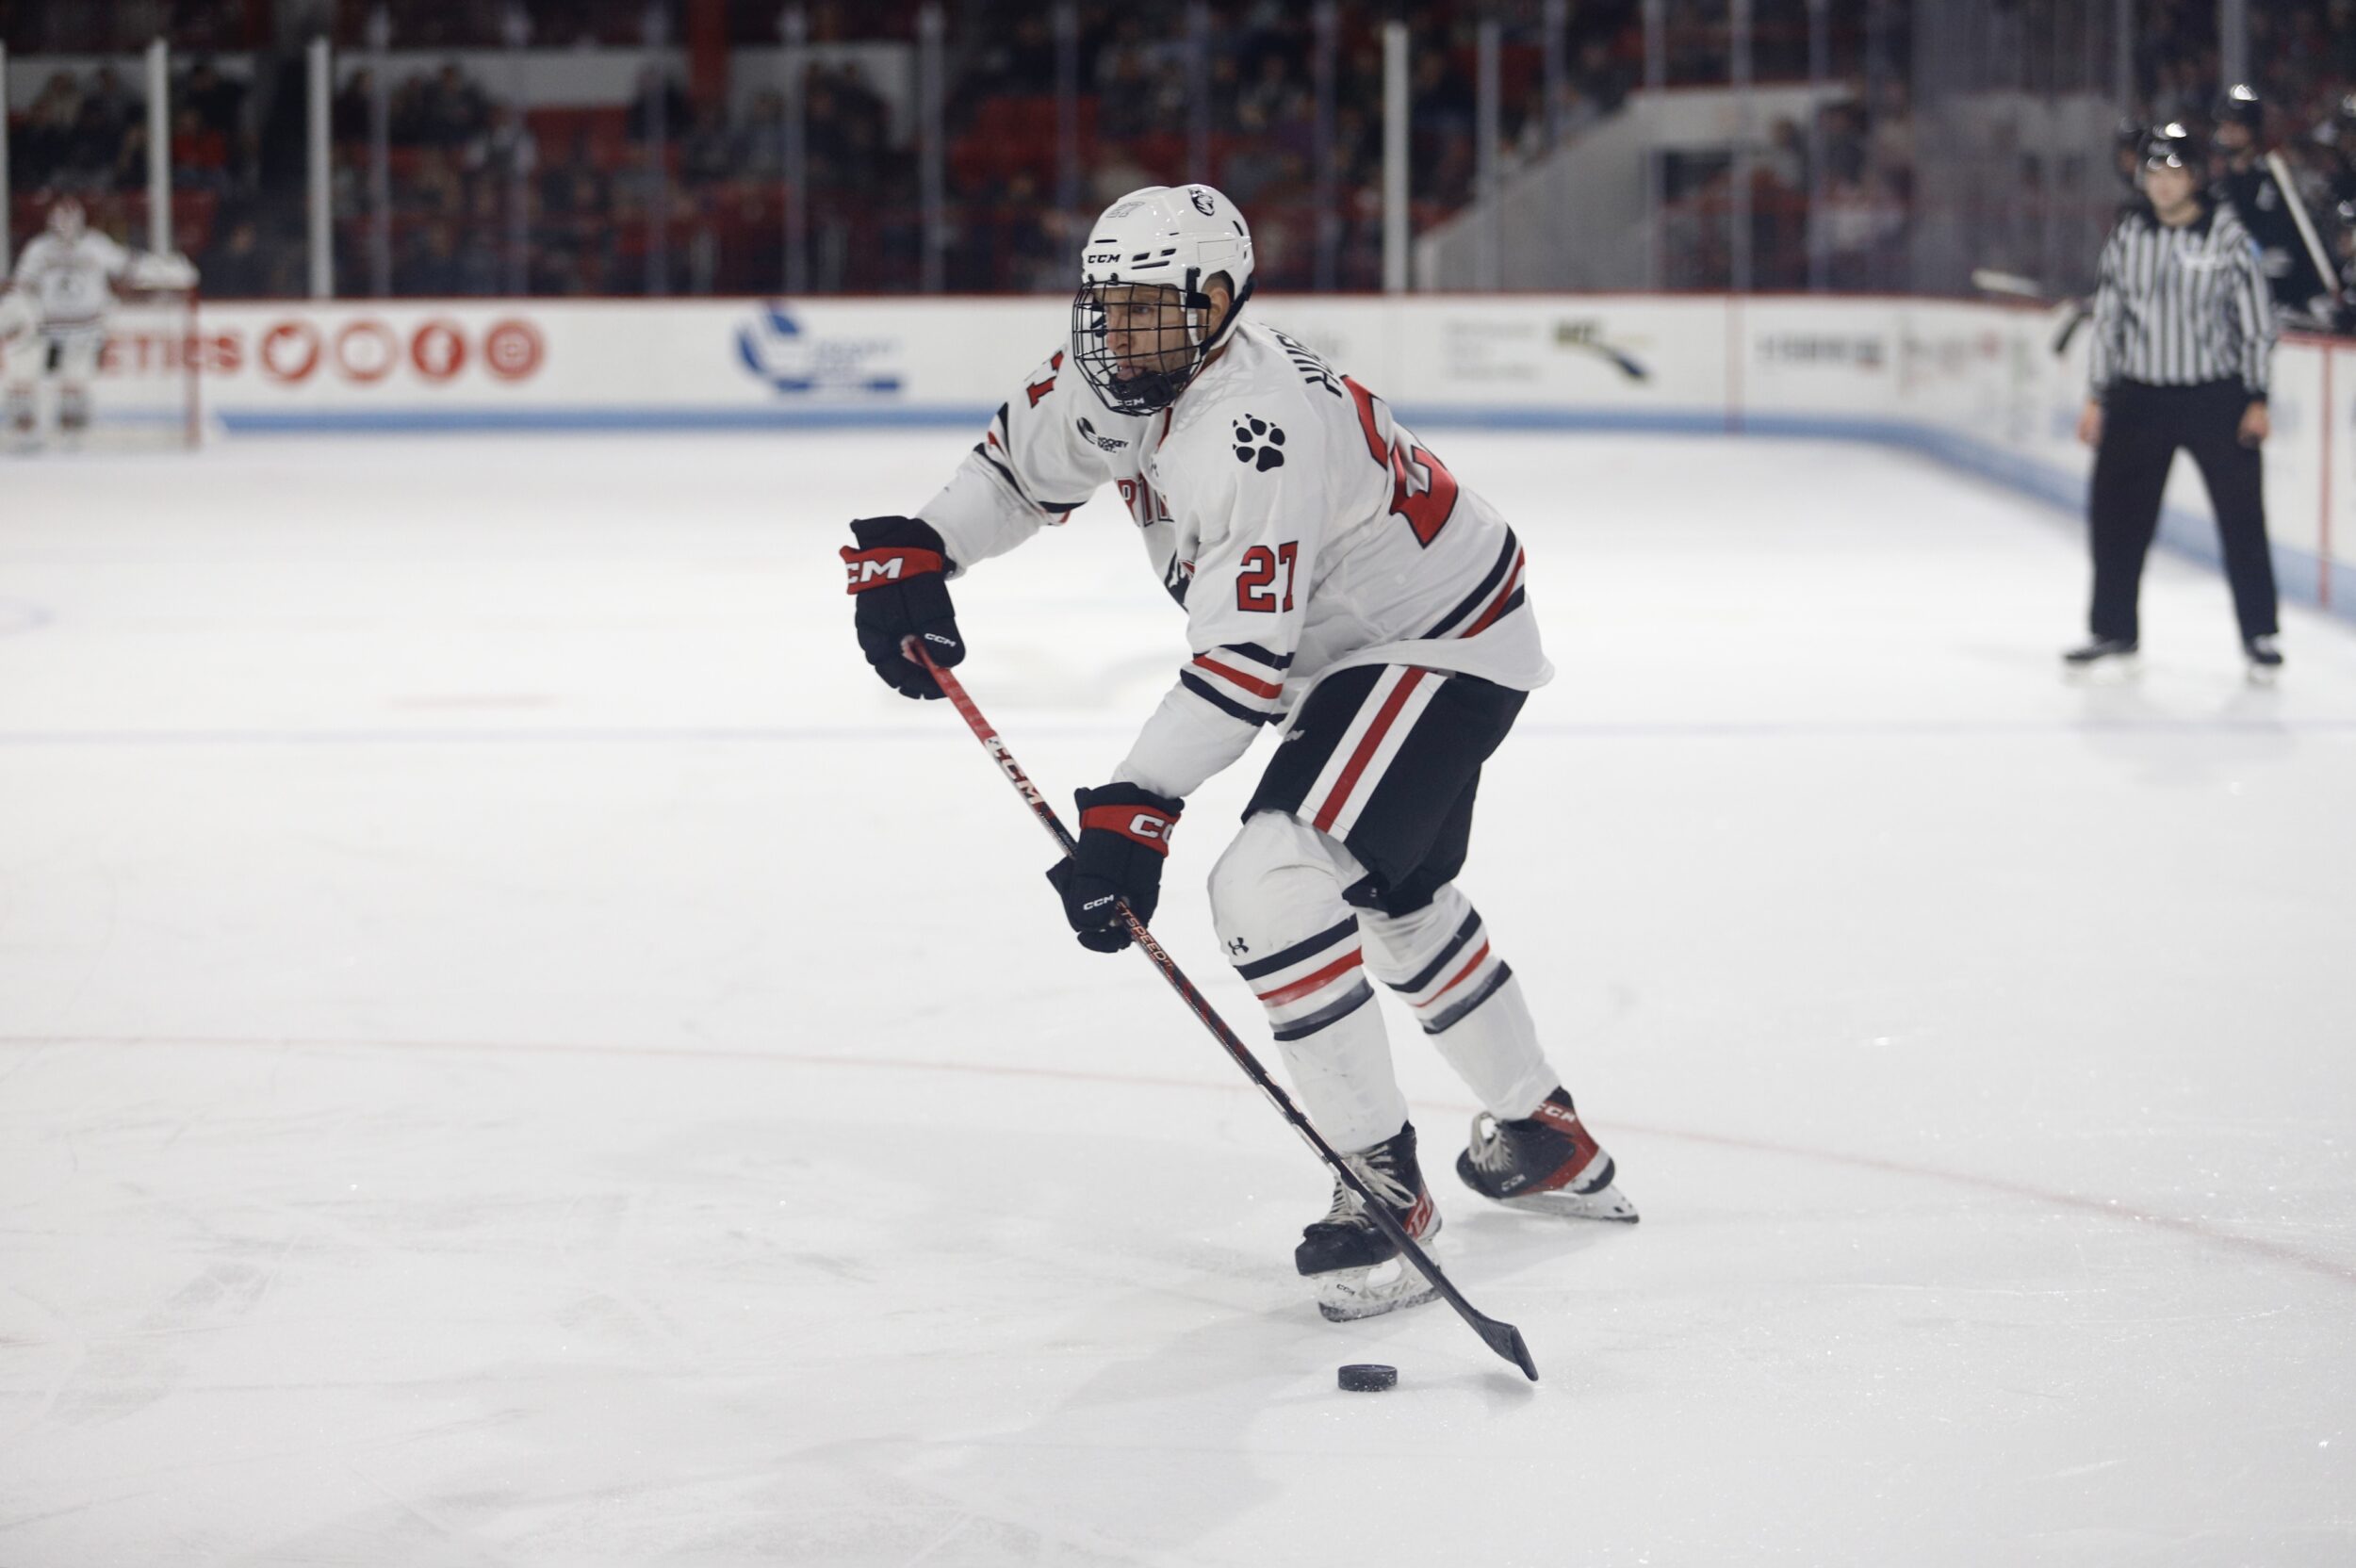 Smallest player shines for resurgent UMaine men's hockey team